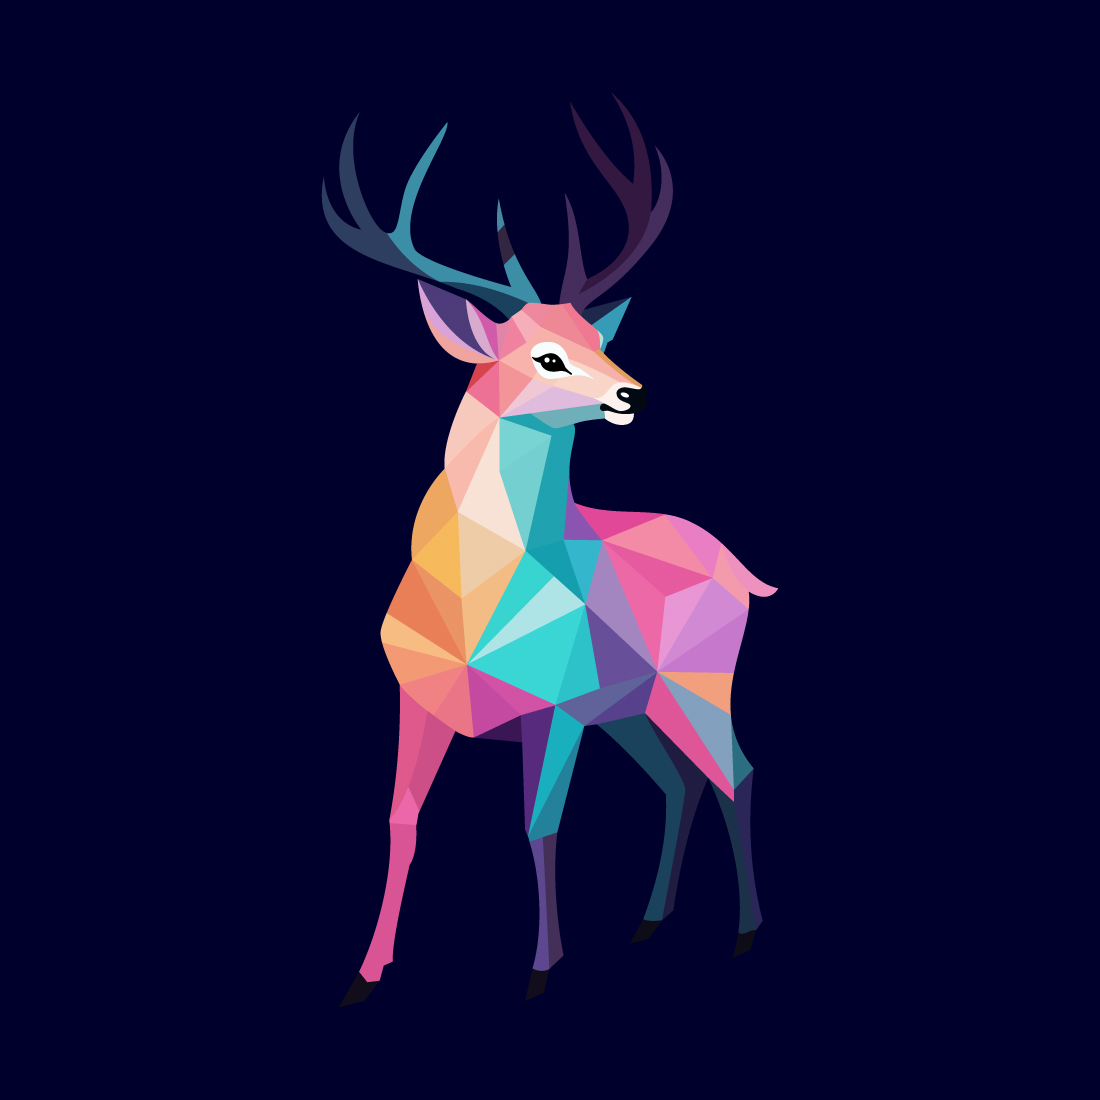 Geometric Deer Colorful Logo Deer Head Logo Design Vector illustration cover image.